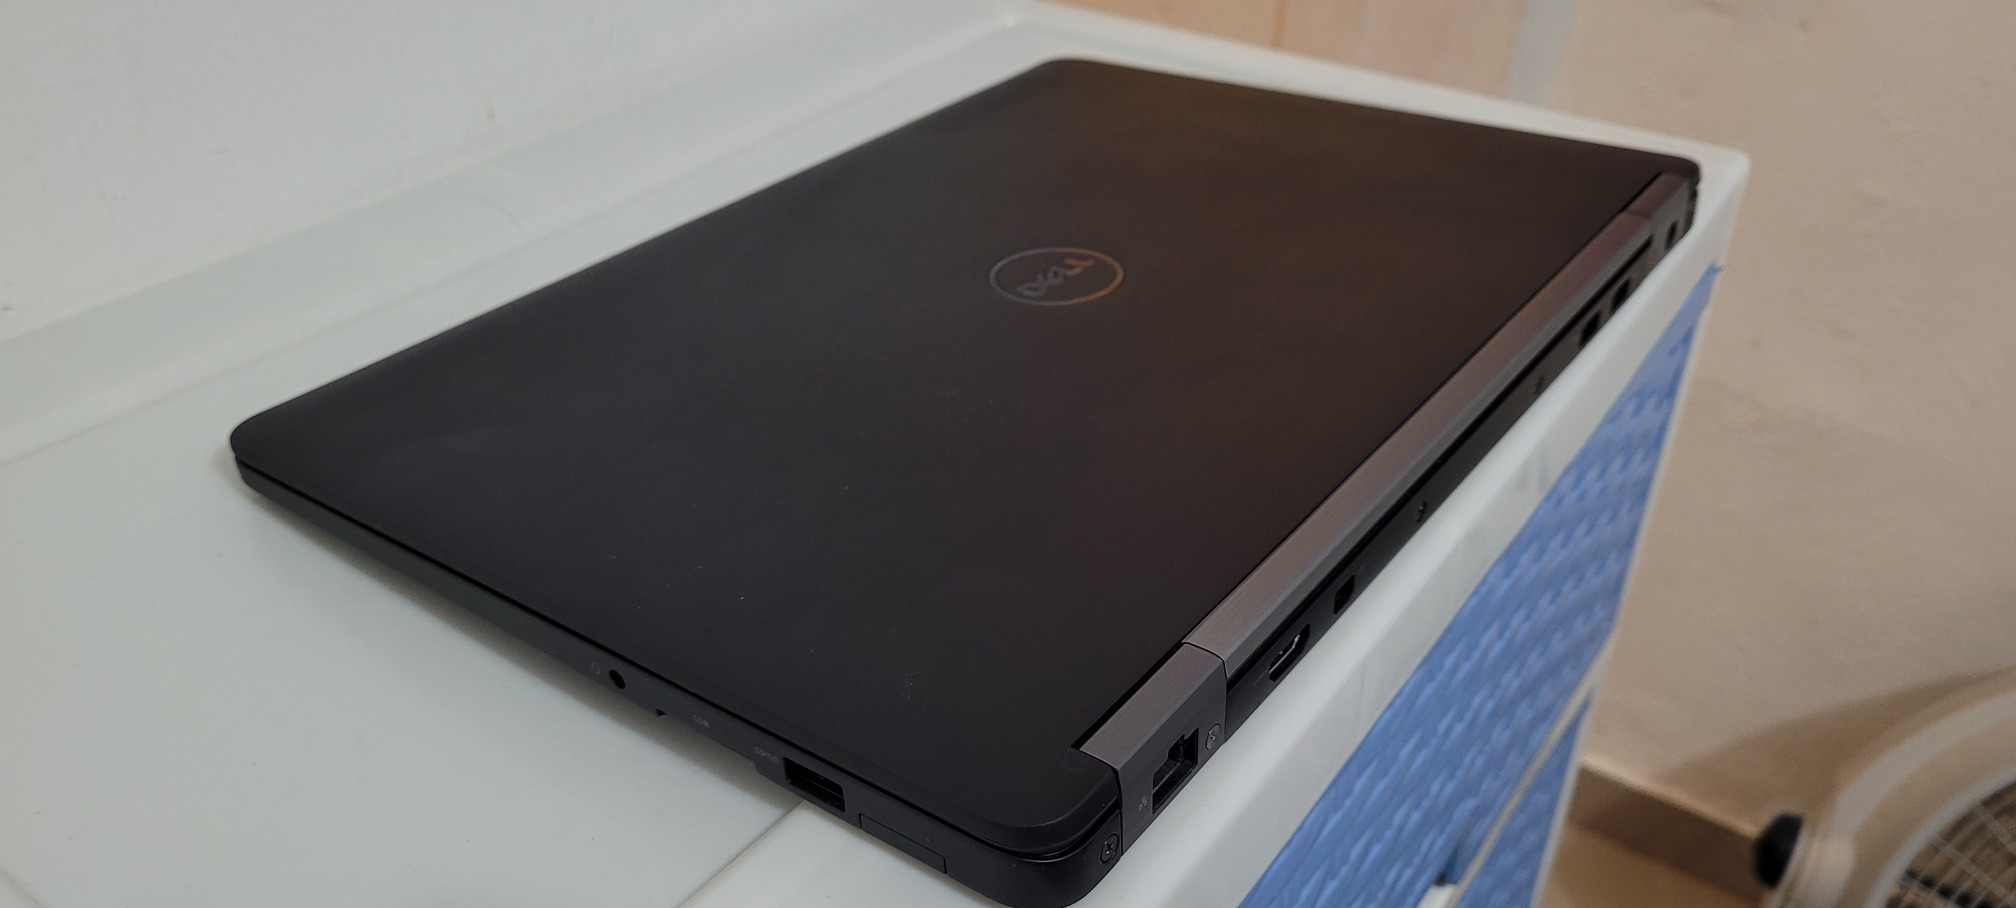 computadoras y laptops - Dell 7480 14 Pulg Core i5 7ma Ram 8gb ddr4 Disco 128gb Solido 2